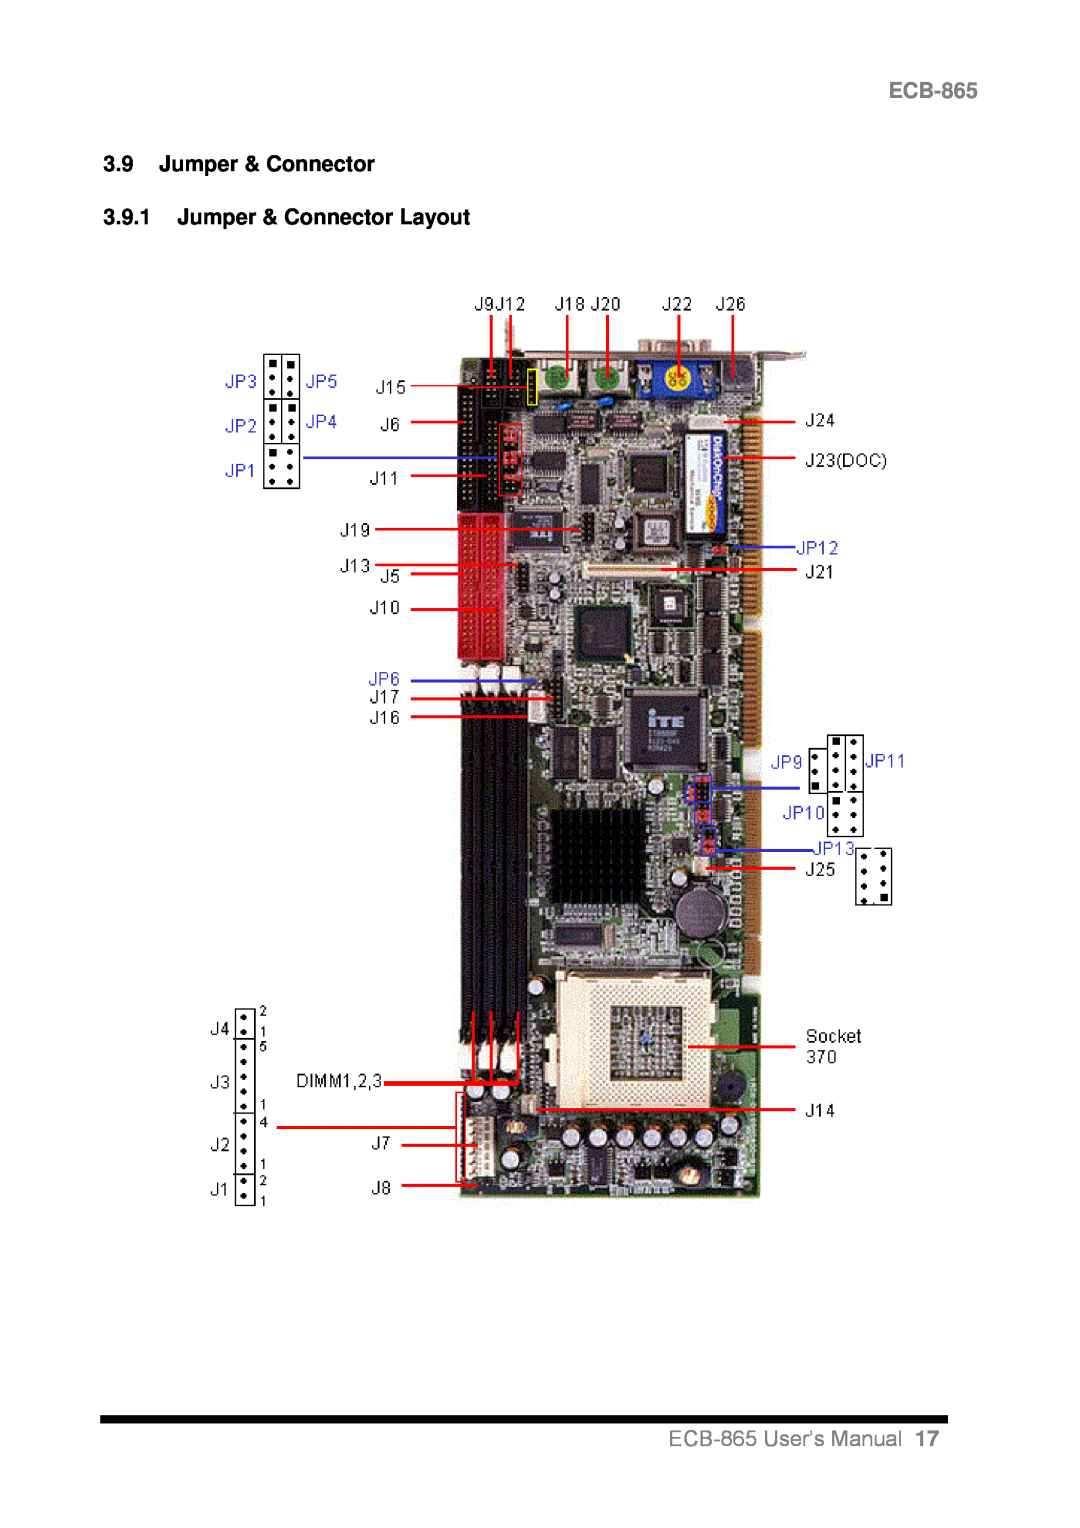 Intel user manual 3.9Jumper & Connector, 3.9.1Jumper & Connector Layout, ECB-865User’s Manual 